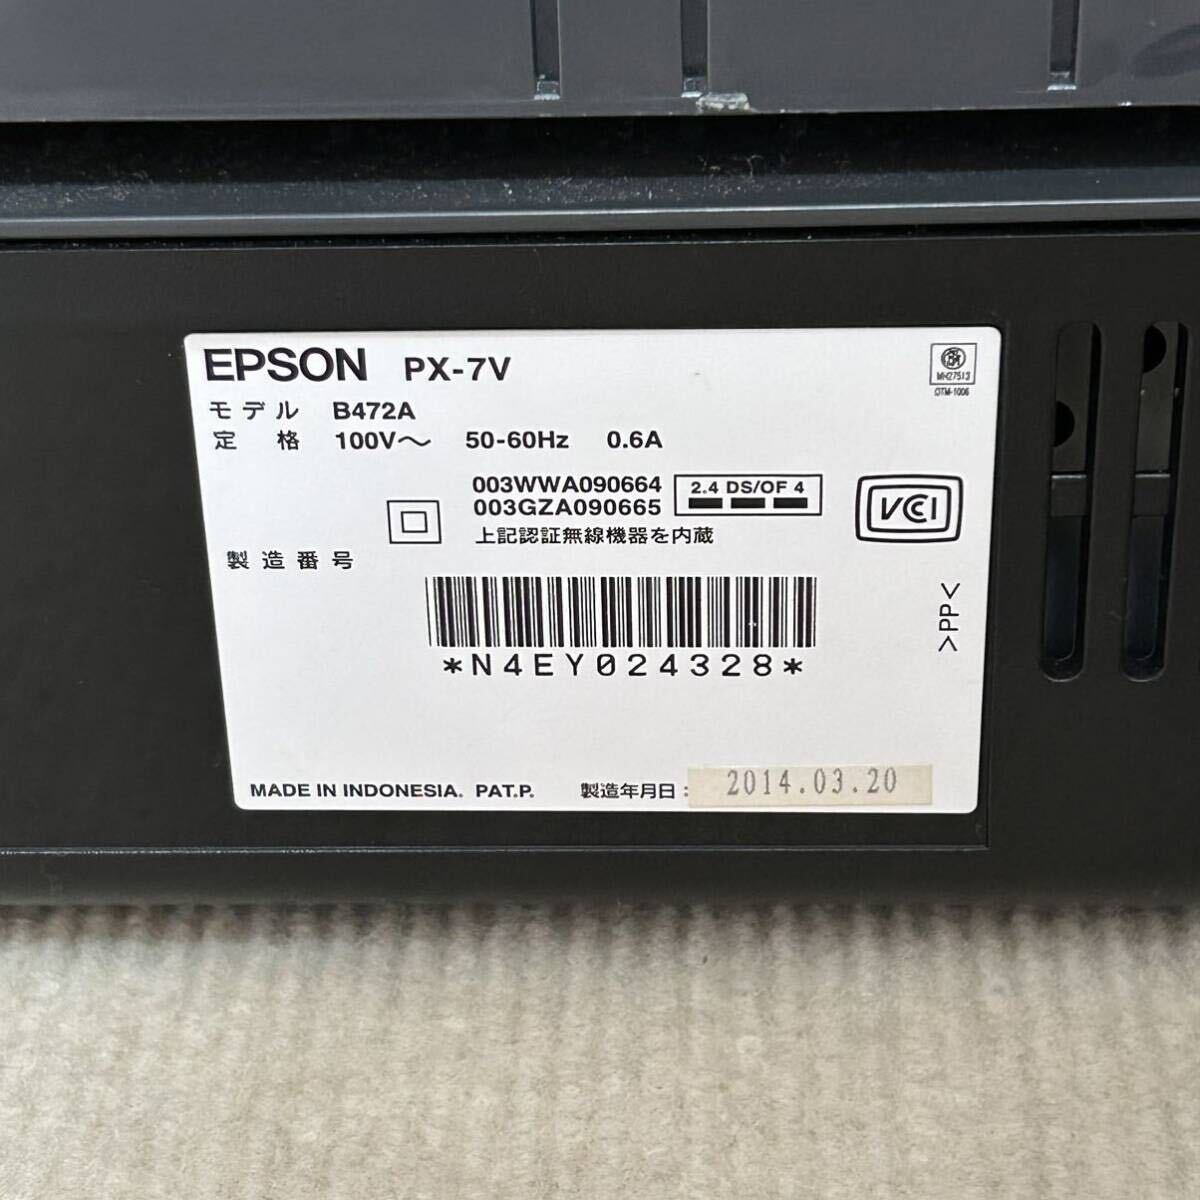 EPSON PX-7V インクジェットプリンター B472A 複合機 A3 無線LAN標準搭載 Wi-Fi スマートフォンプリント対応 2014年製 動作未確認の画像3